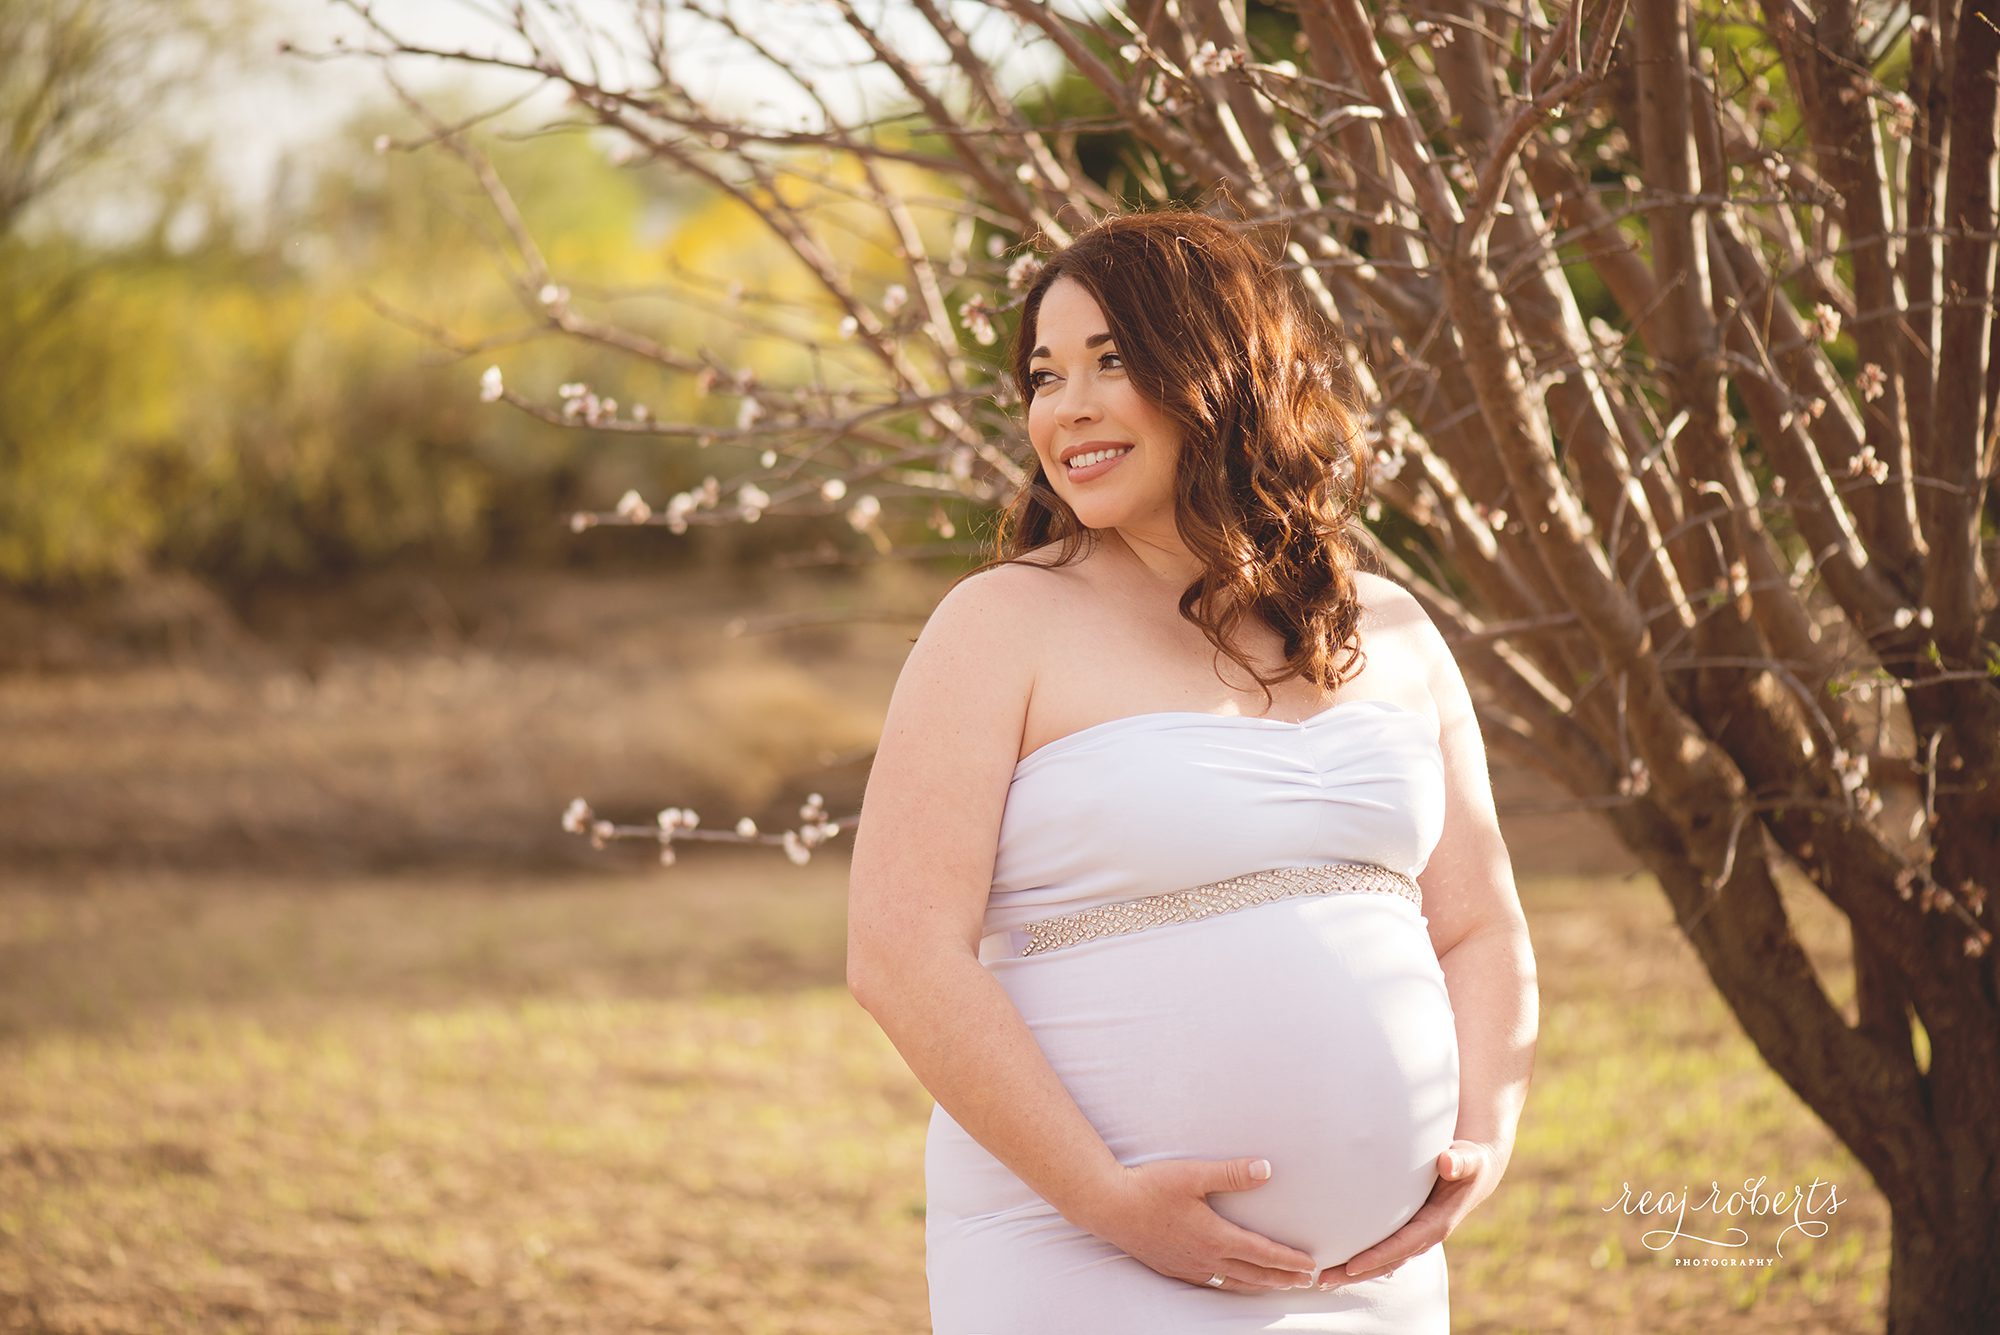 Cherry Blossom Maternity Photographer | Reaj Roberts Photography